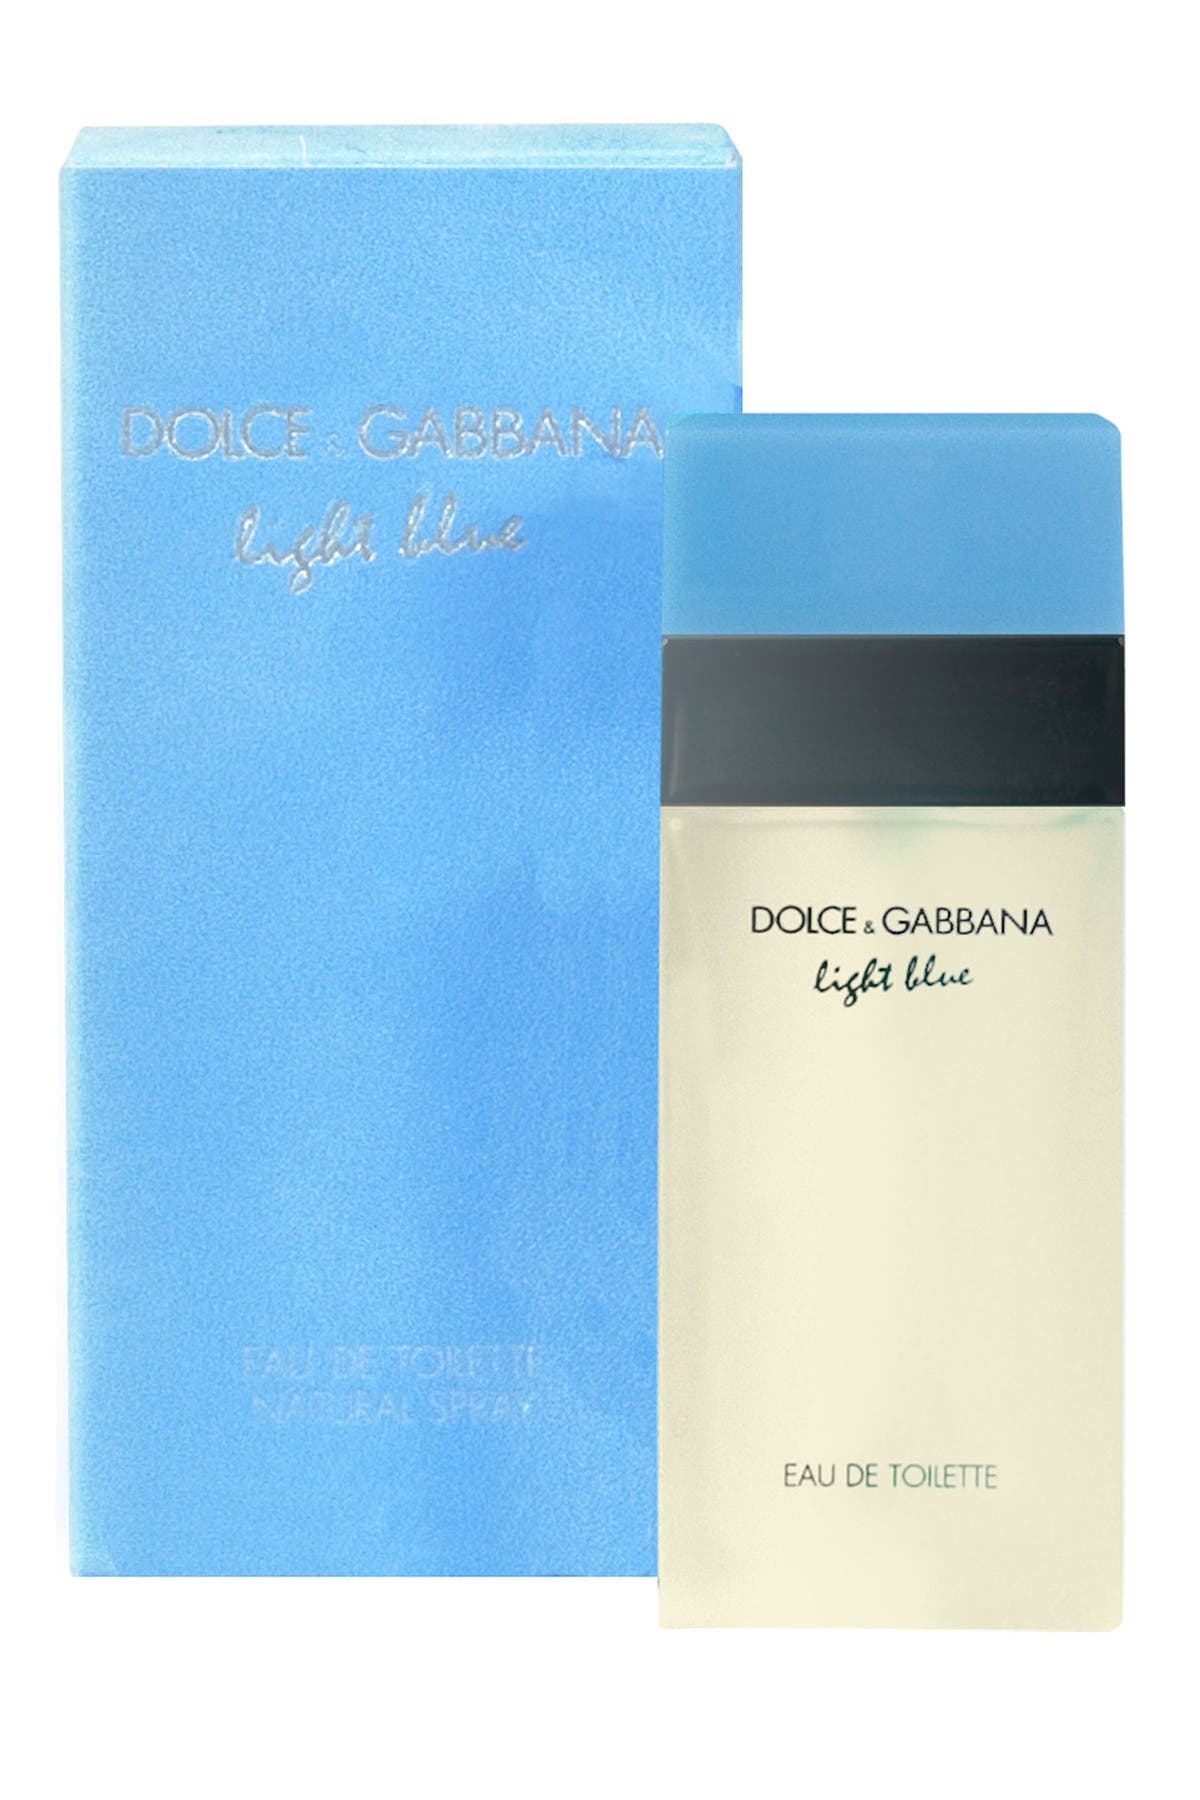 dolce and gabbana light blue nordstrom